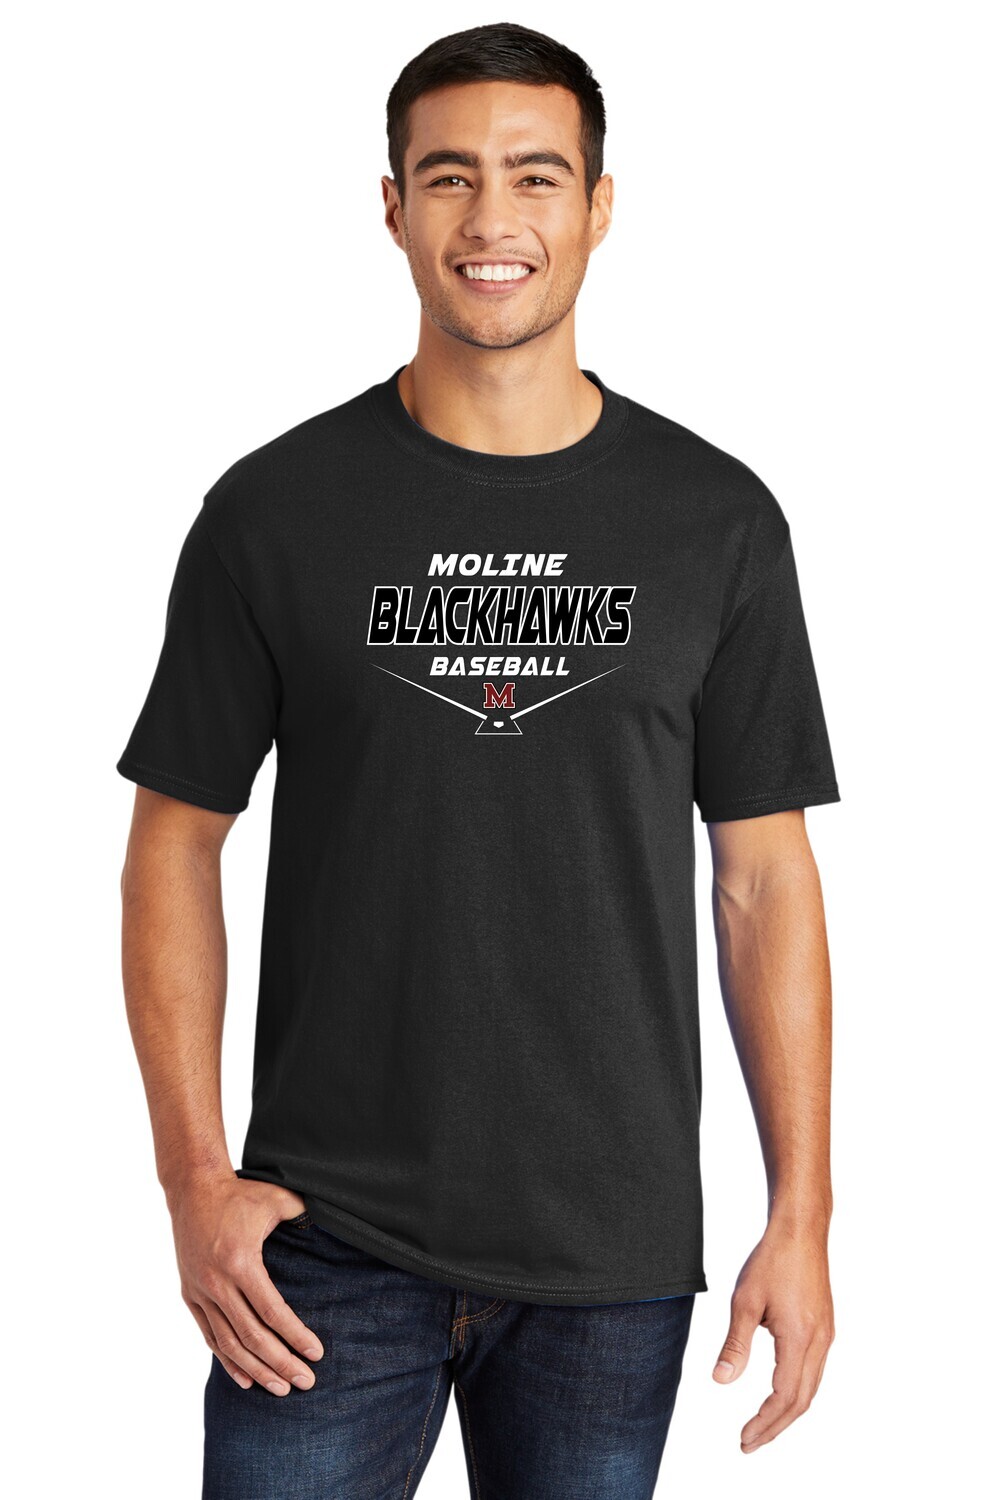 Moline Blackhawks Home Plate Logo 50/50 Blend Adult T-shirt